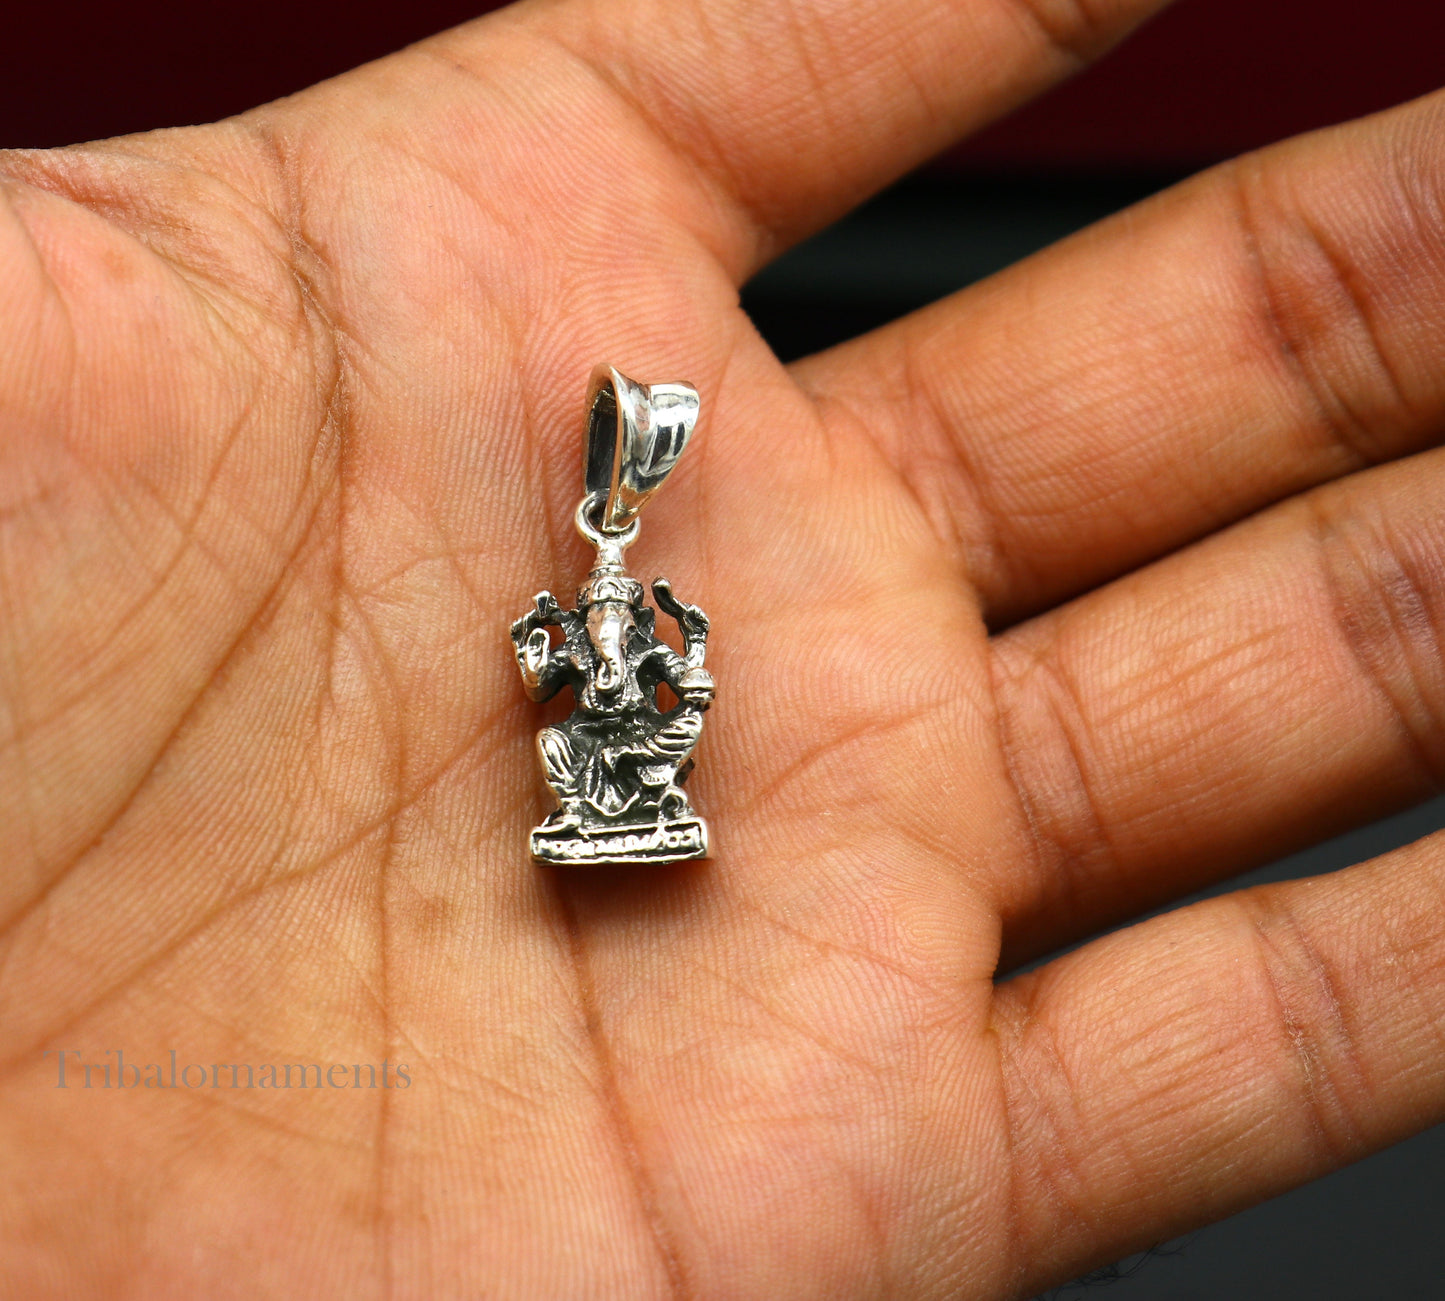 Elegant design Divine lord Ganesha blessing pendant, excellent vintage designer 925 sterling silver handmade jewelry from india ssp933 - TRIBAL ORNAMENTS